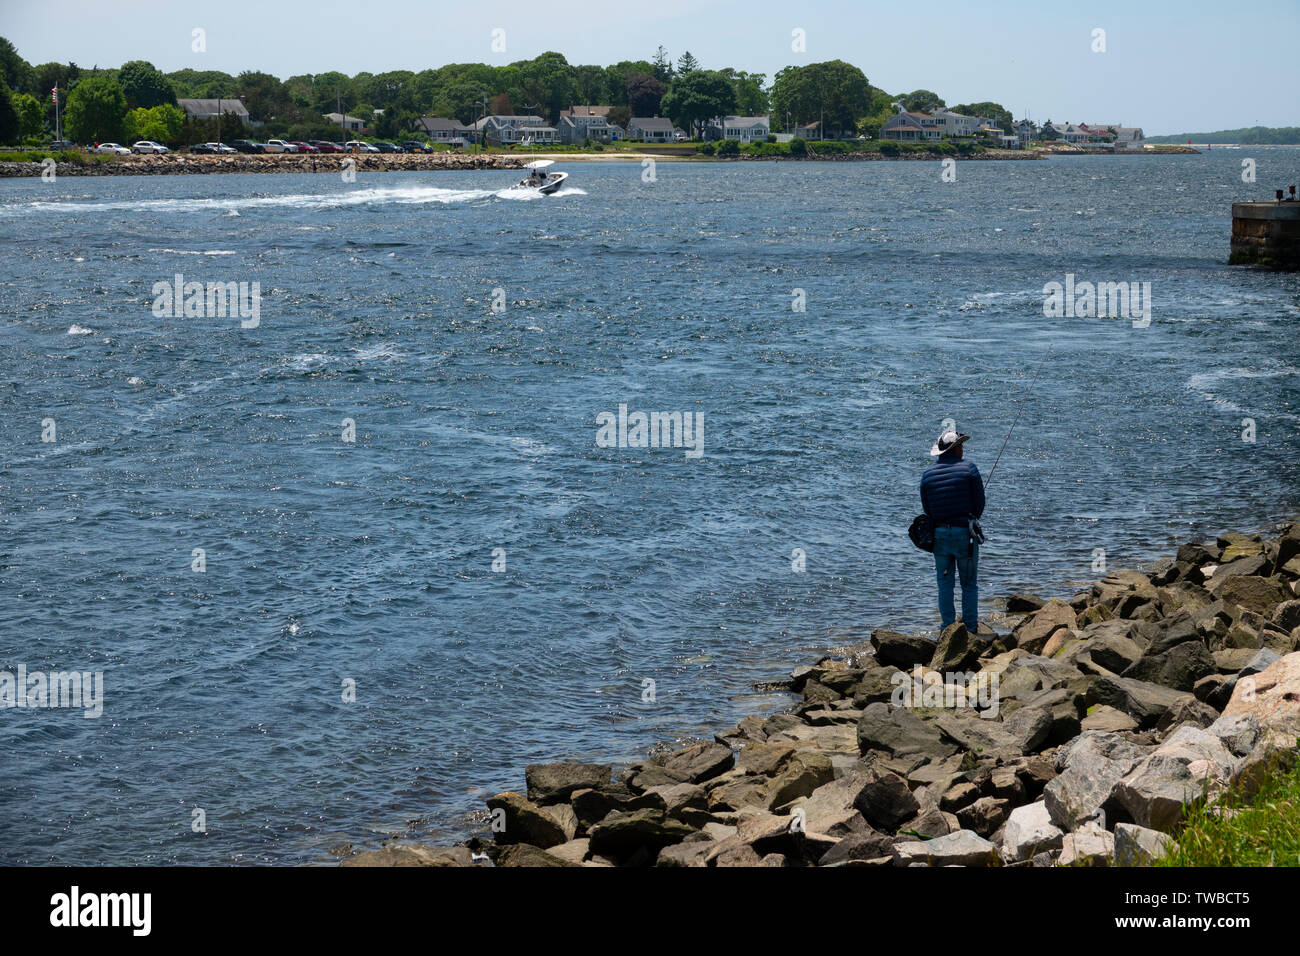 USA Massachusetts MA Buzzards Bay Cape Cod Canal people enjoying the outdoors fishing boating Stock Photo